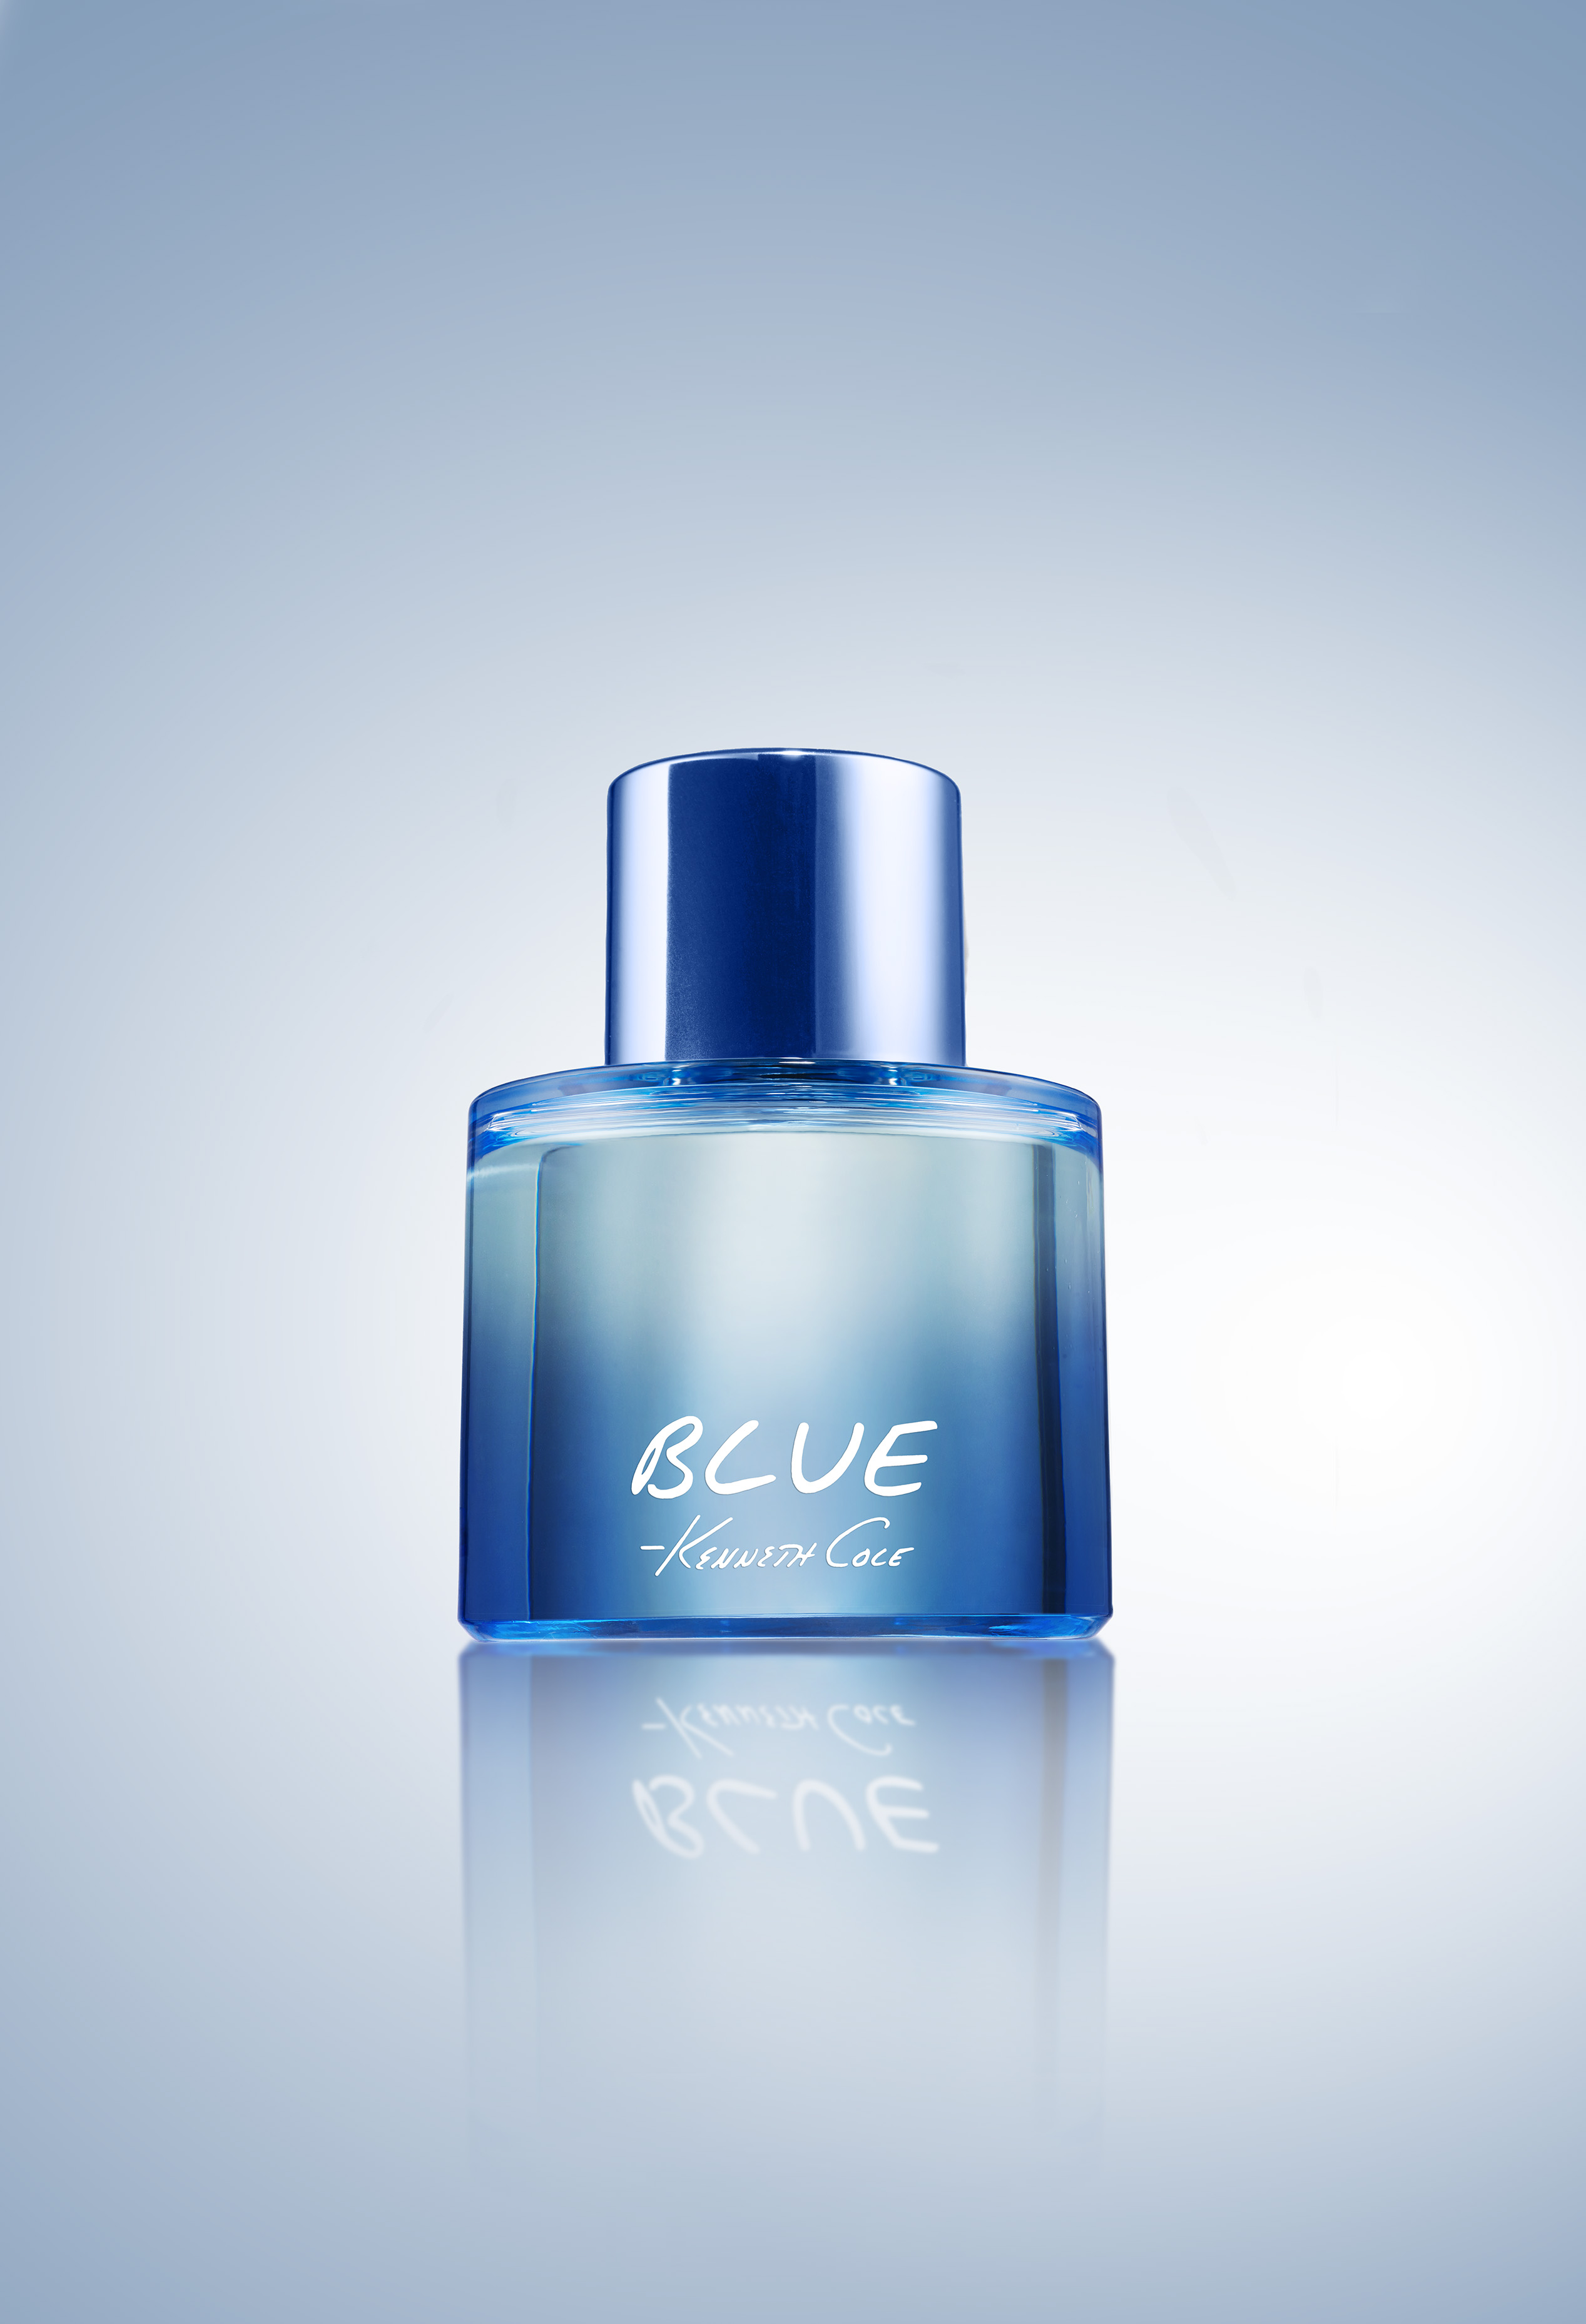 Kenneth Cole Blue Fragrance